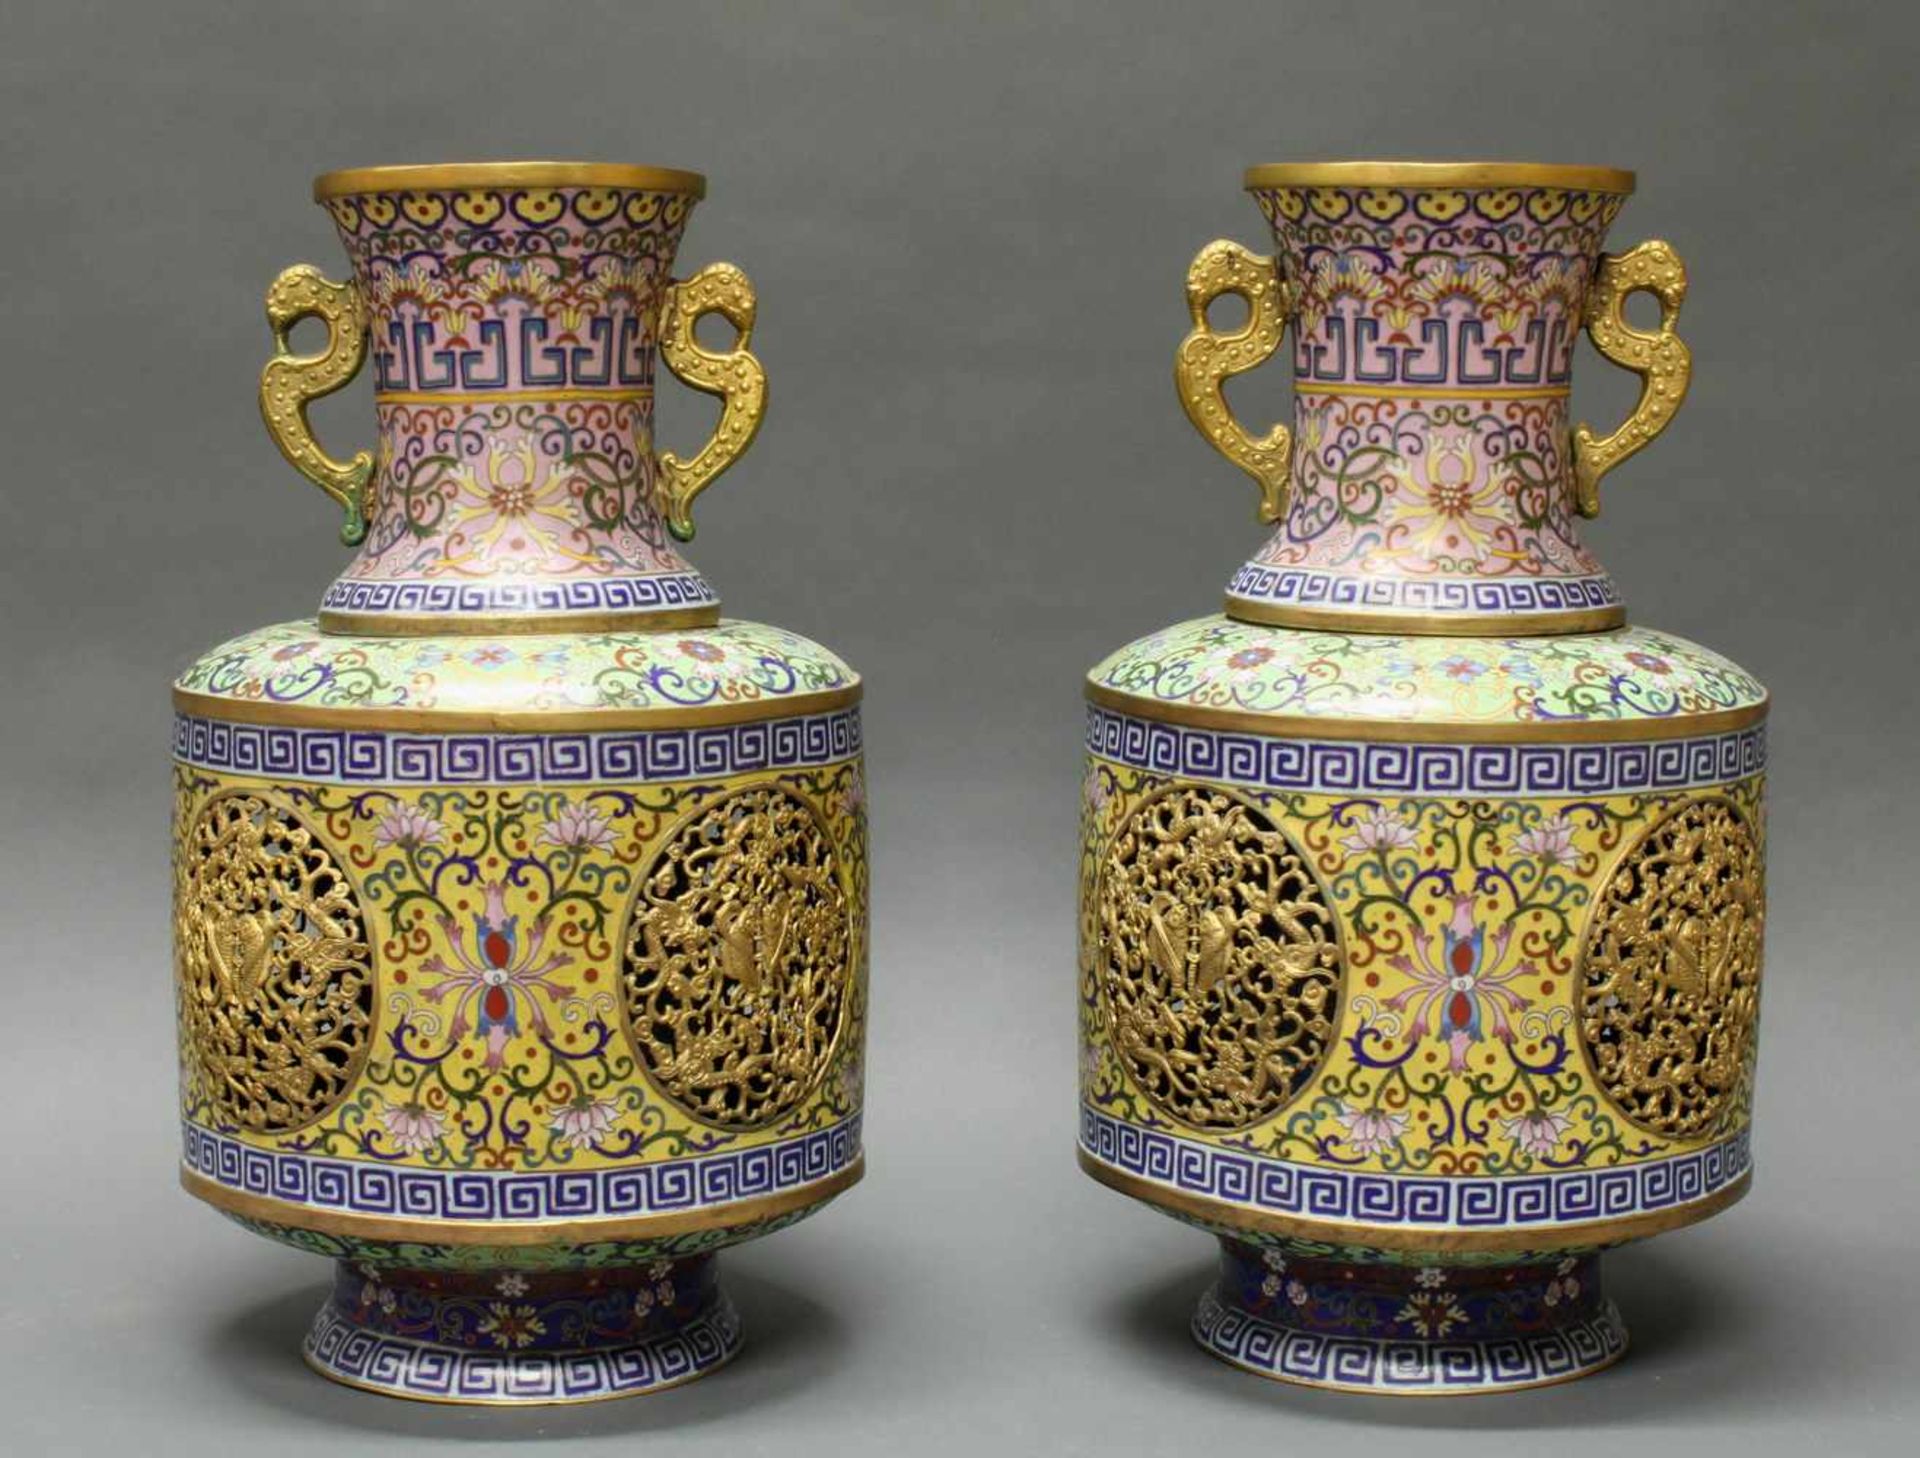 Paar Vasen, China, um 1900, Cloisonné, doppelwandig, auf niedrigem Fuß, trommelförmiger Korpus, vier - Image 2 of 2